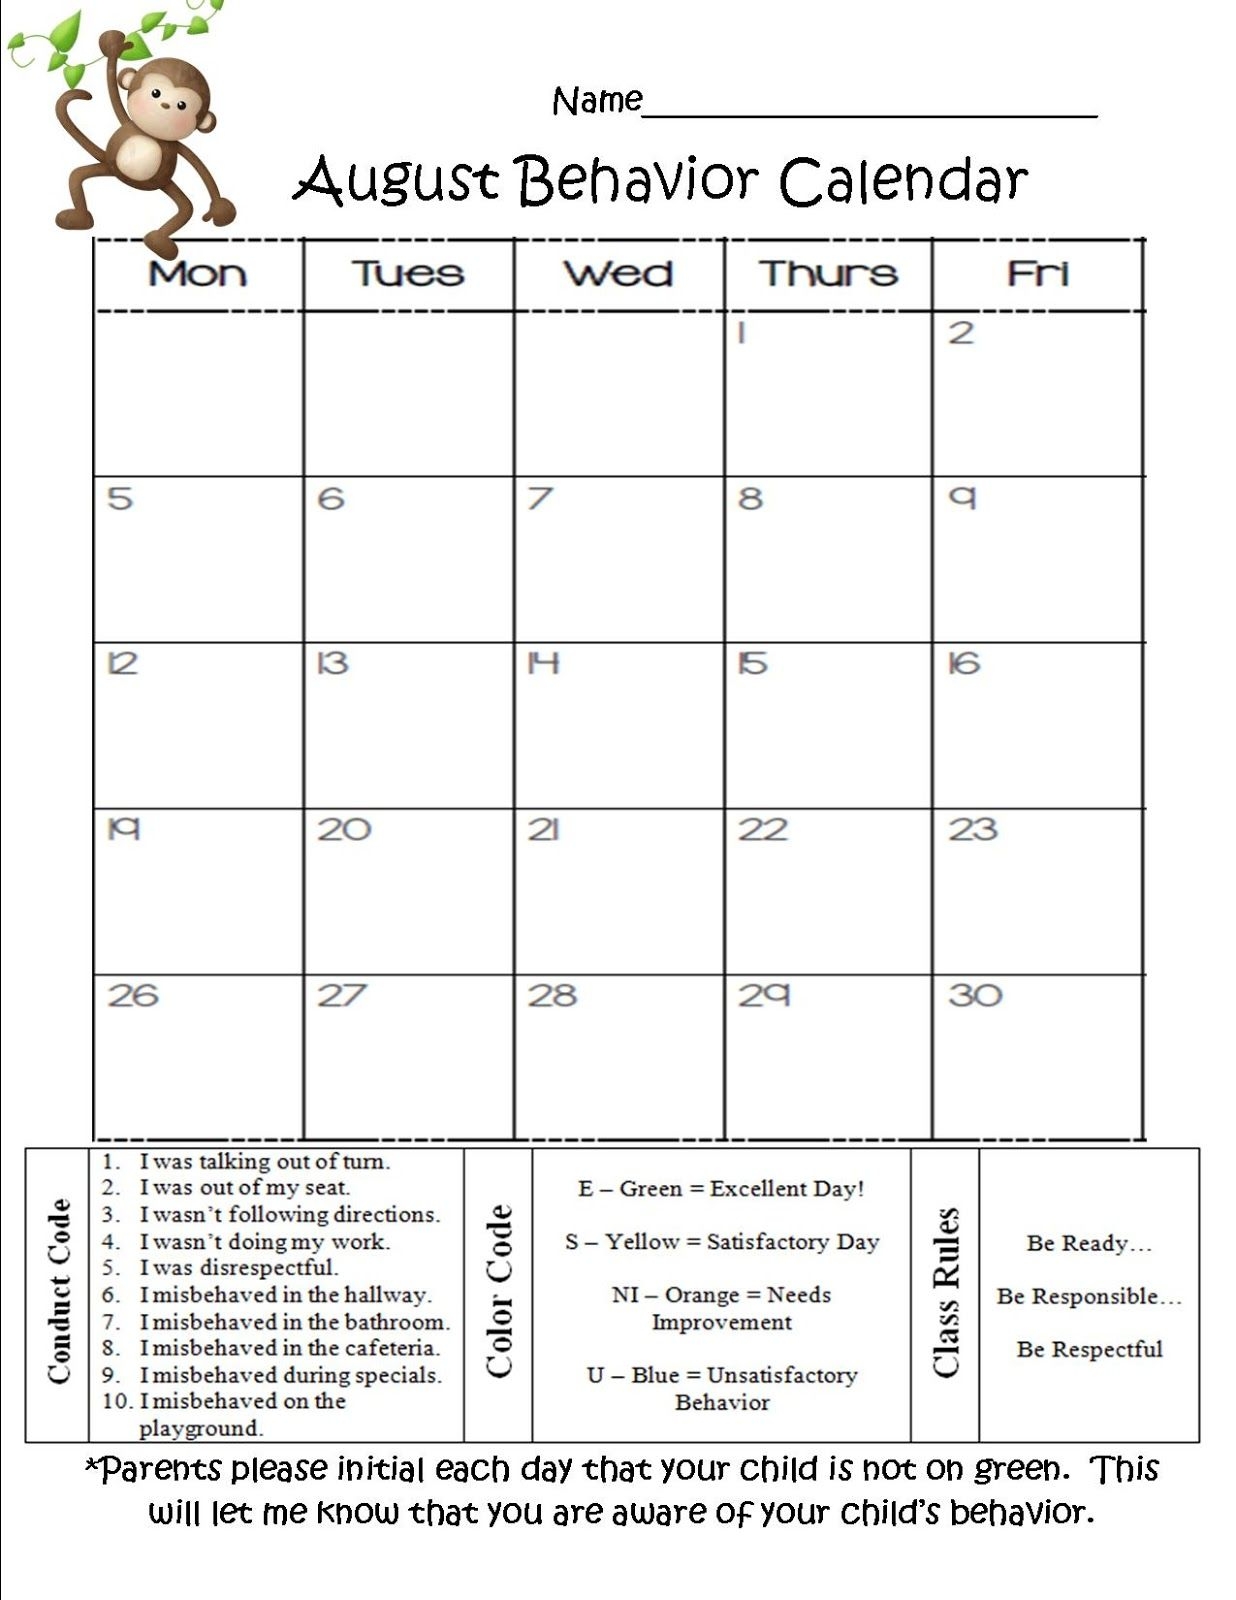 mrs cook&#039;s 2nd grade blog: monthly behavior calendar